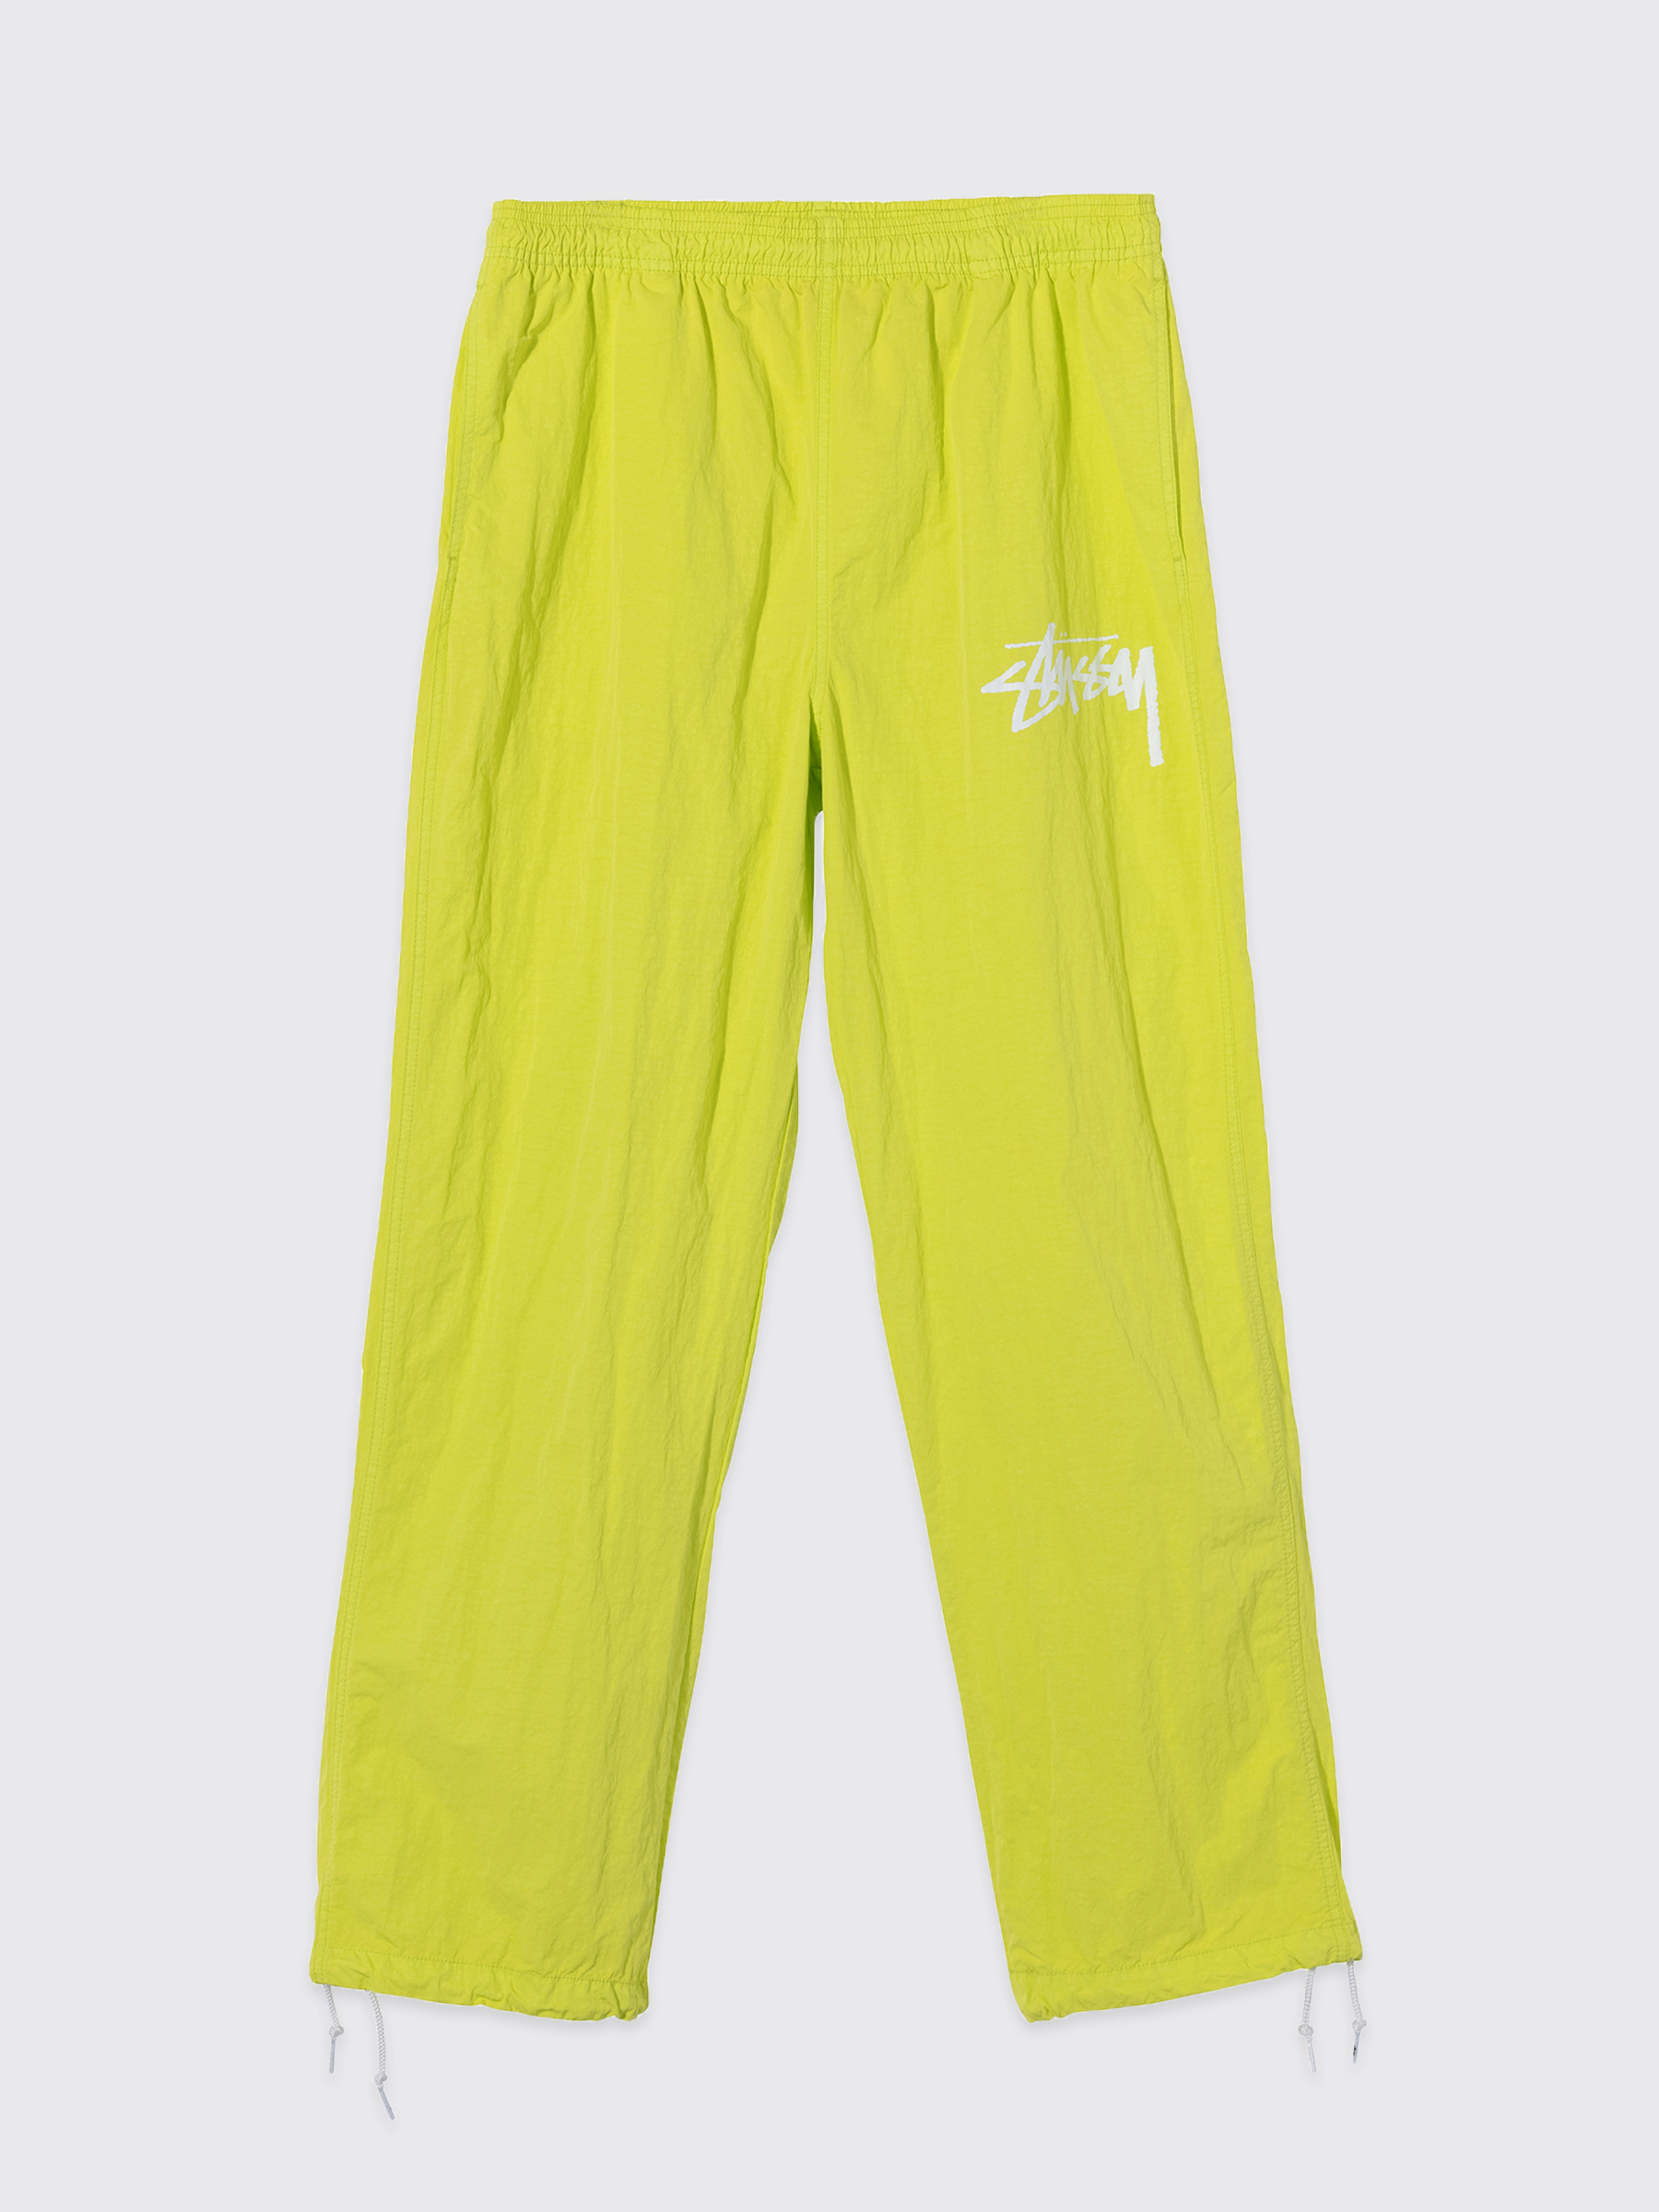 Nike x Stüssy Beach Pants Bright Cactus